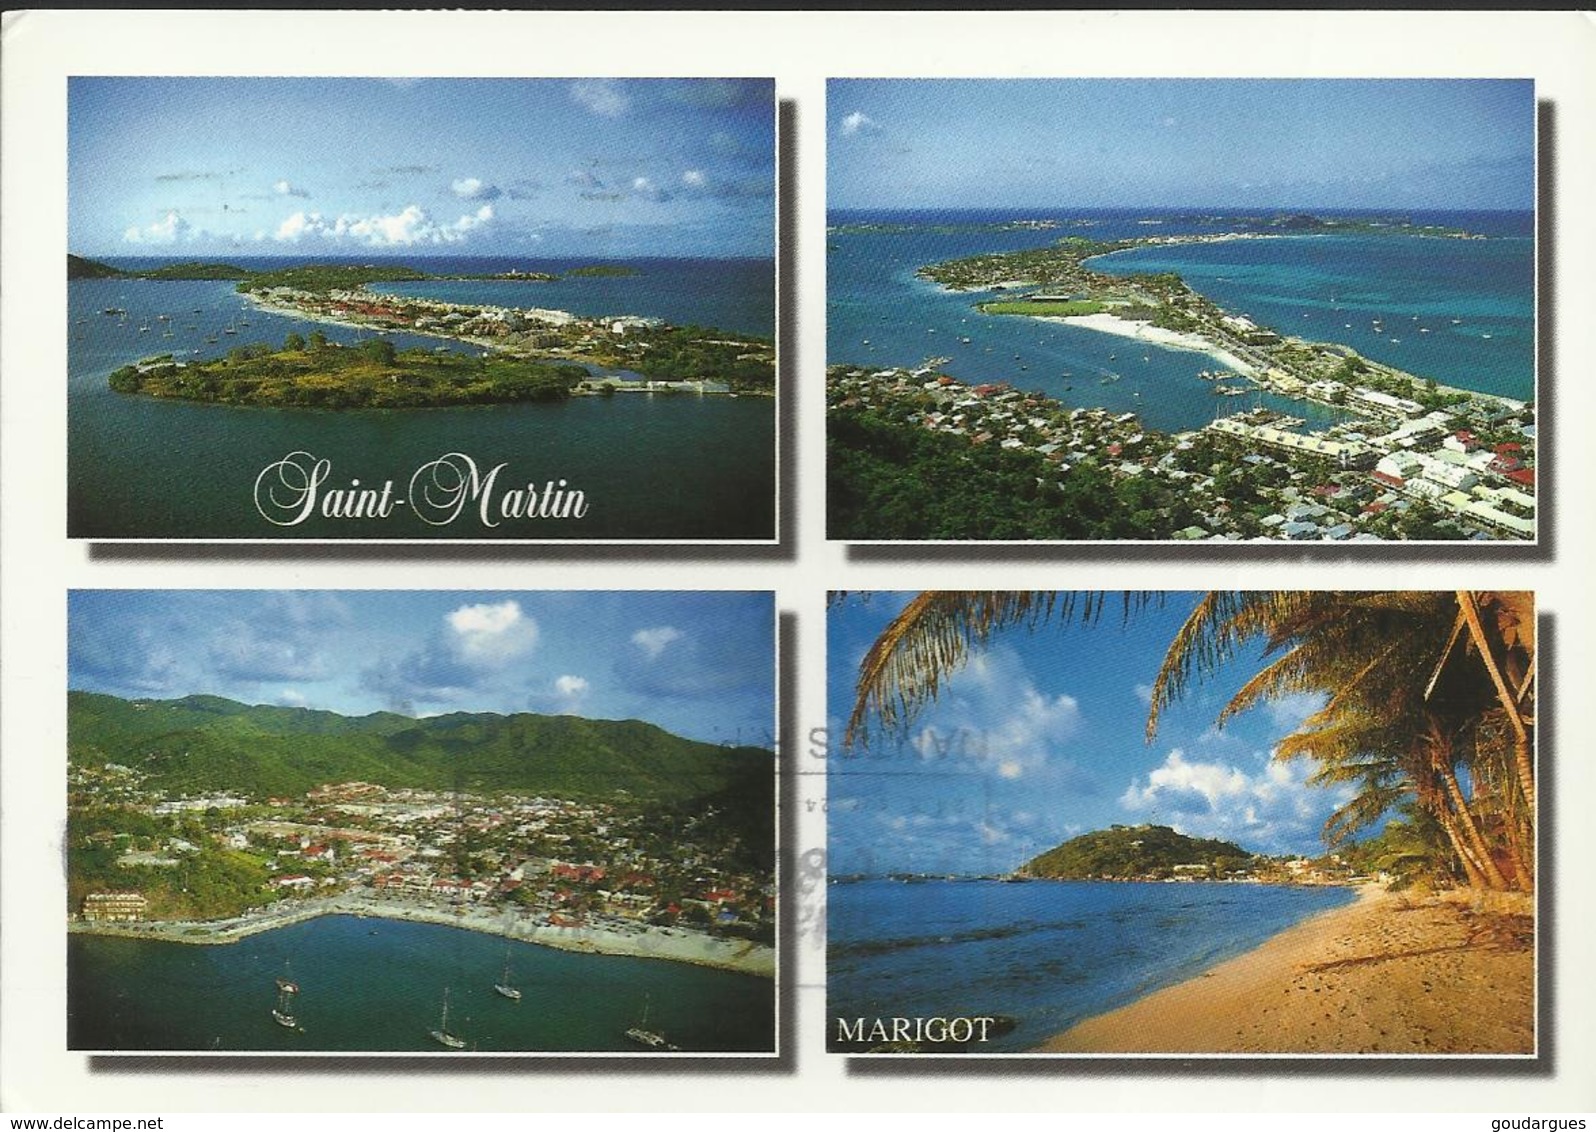 Saint Marin - Marigot - 2 Timbres De "Saint Lucia" De 1996 Et 1997 - Saint-Martin